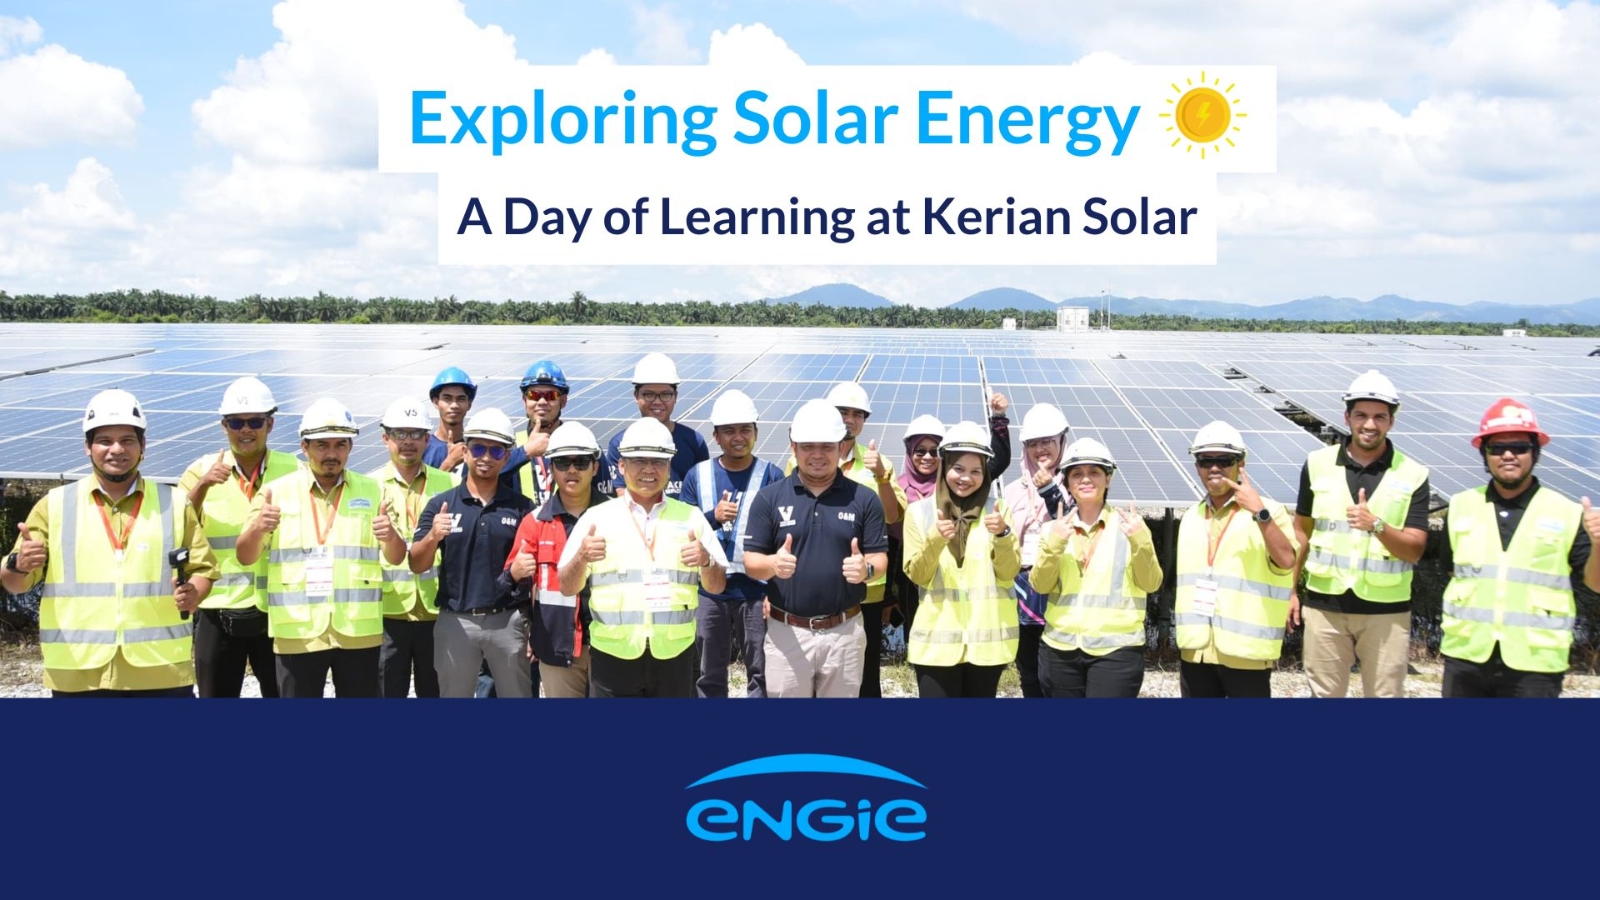 IKM students visiting ENGIE's Kerian Solar farm in Malaysia